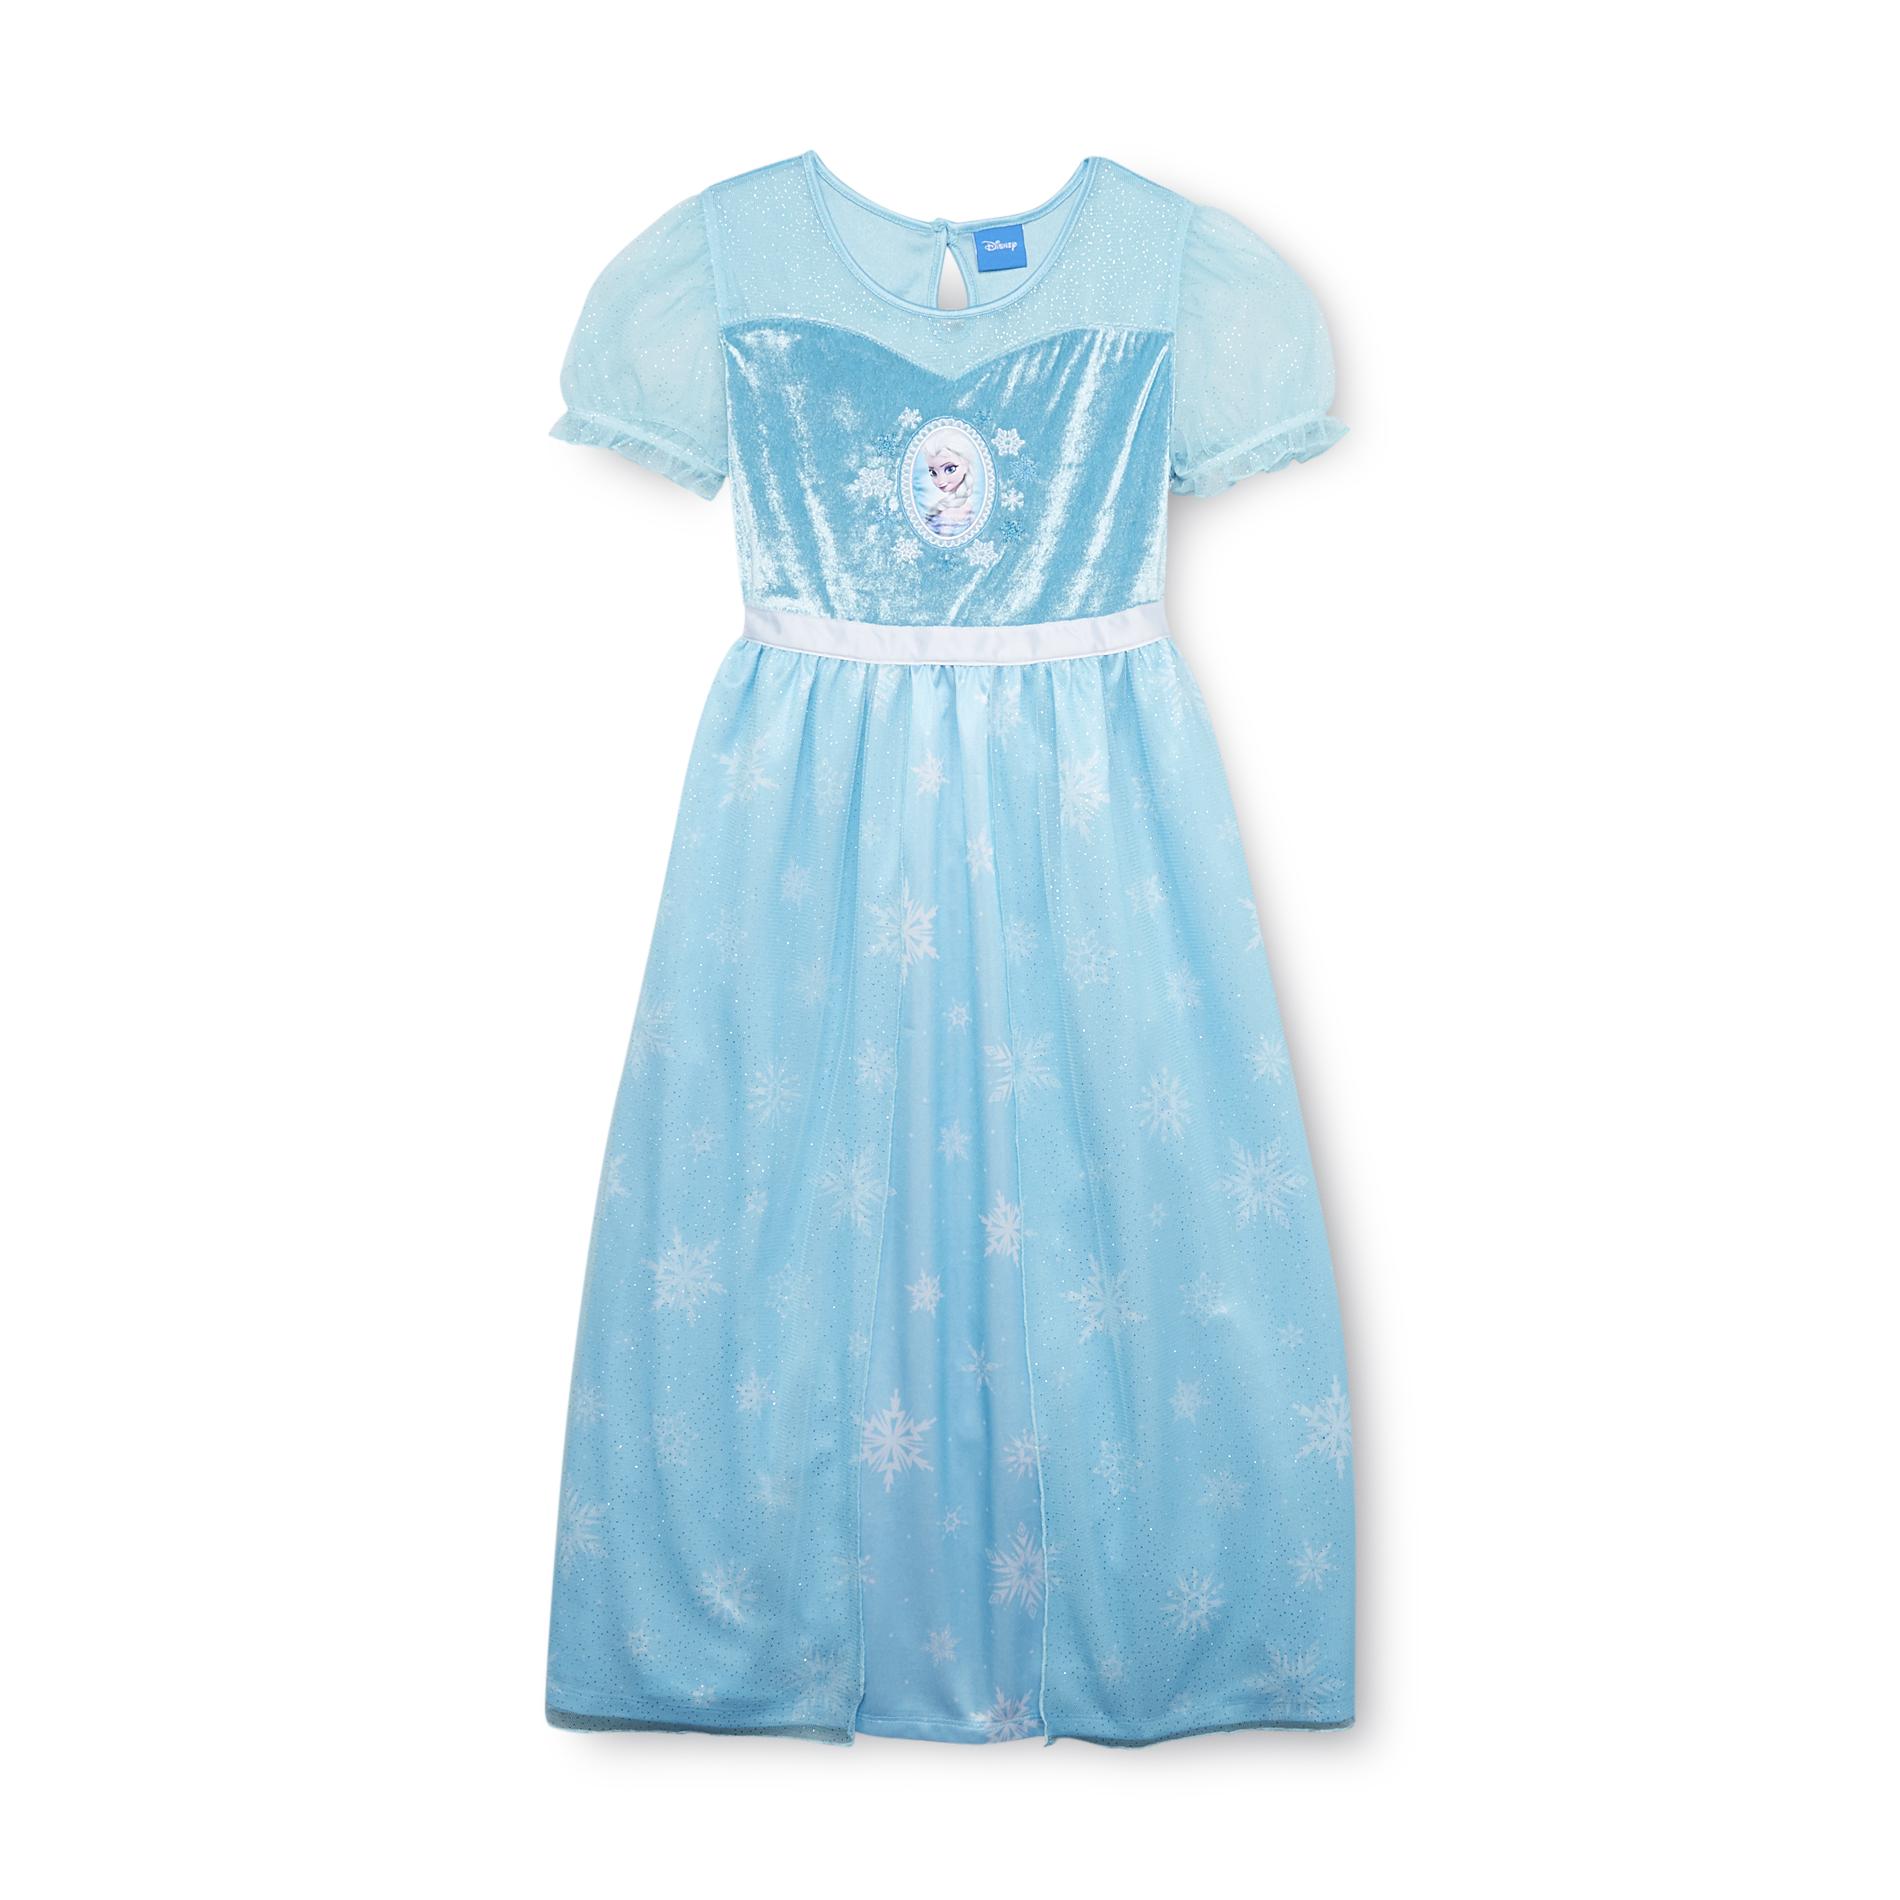 Disney Girl's Costume Nightgown - Frozen